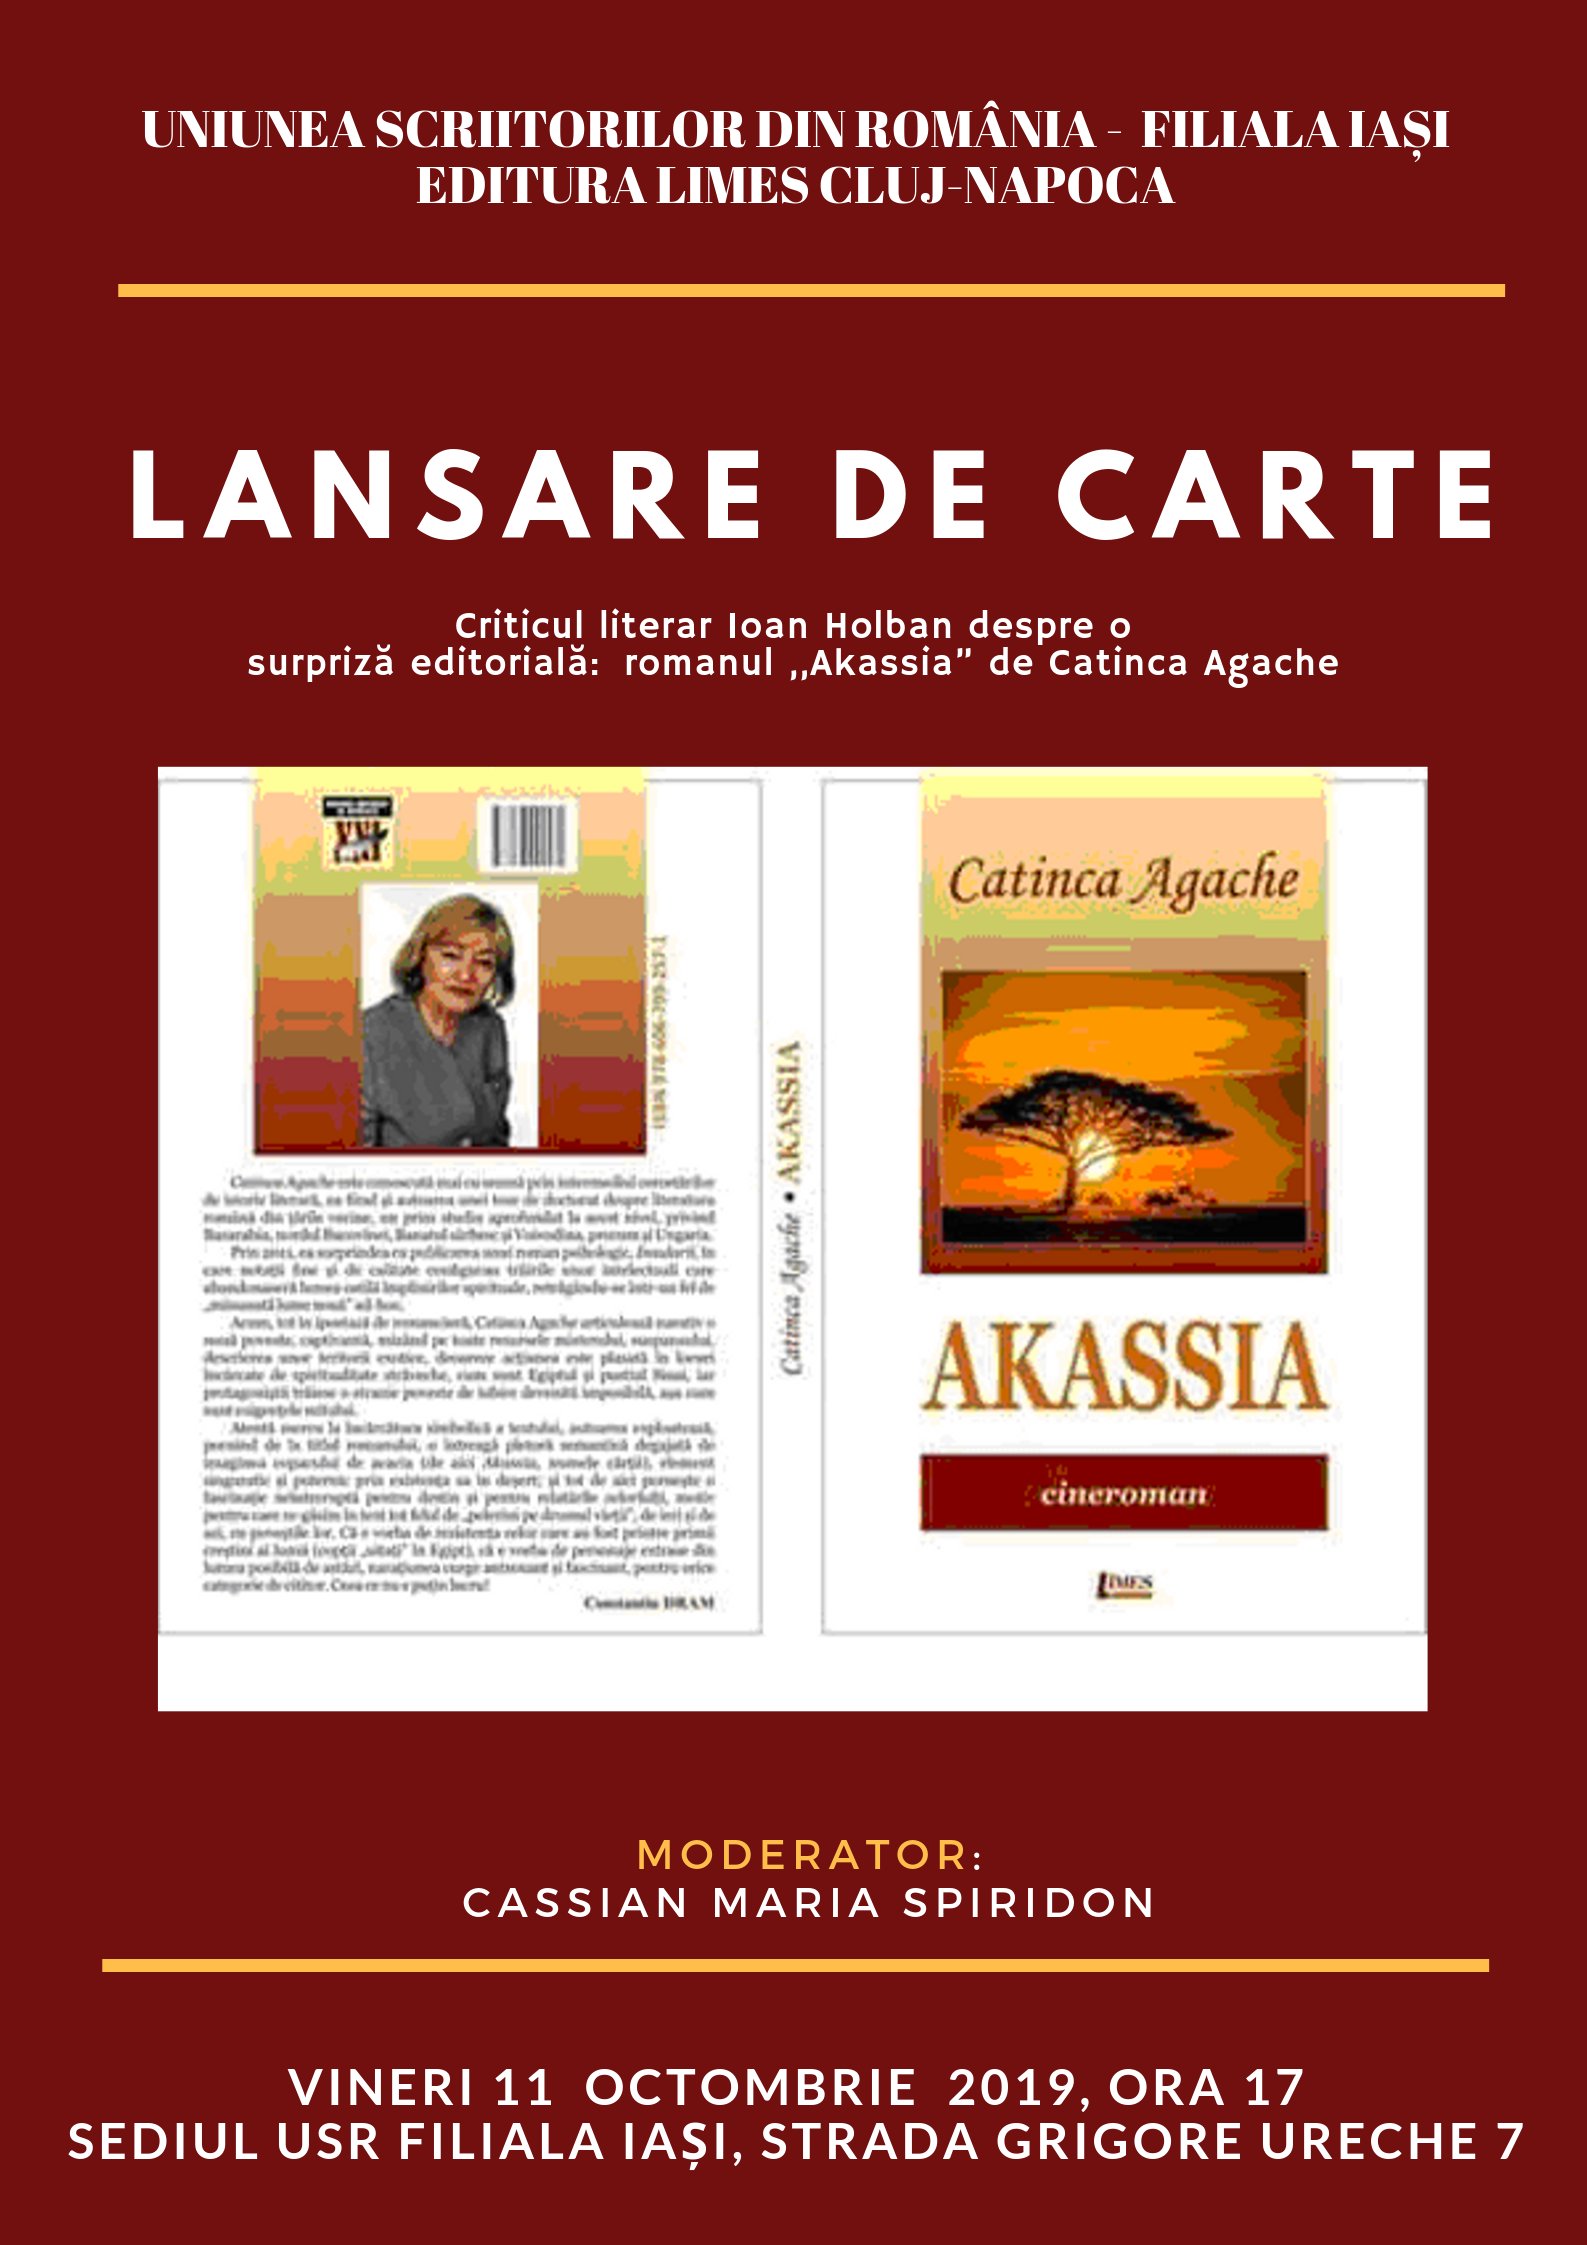 Lansare de  carte: ”Akassia”, autor Catinca Agache